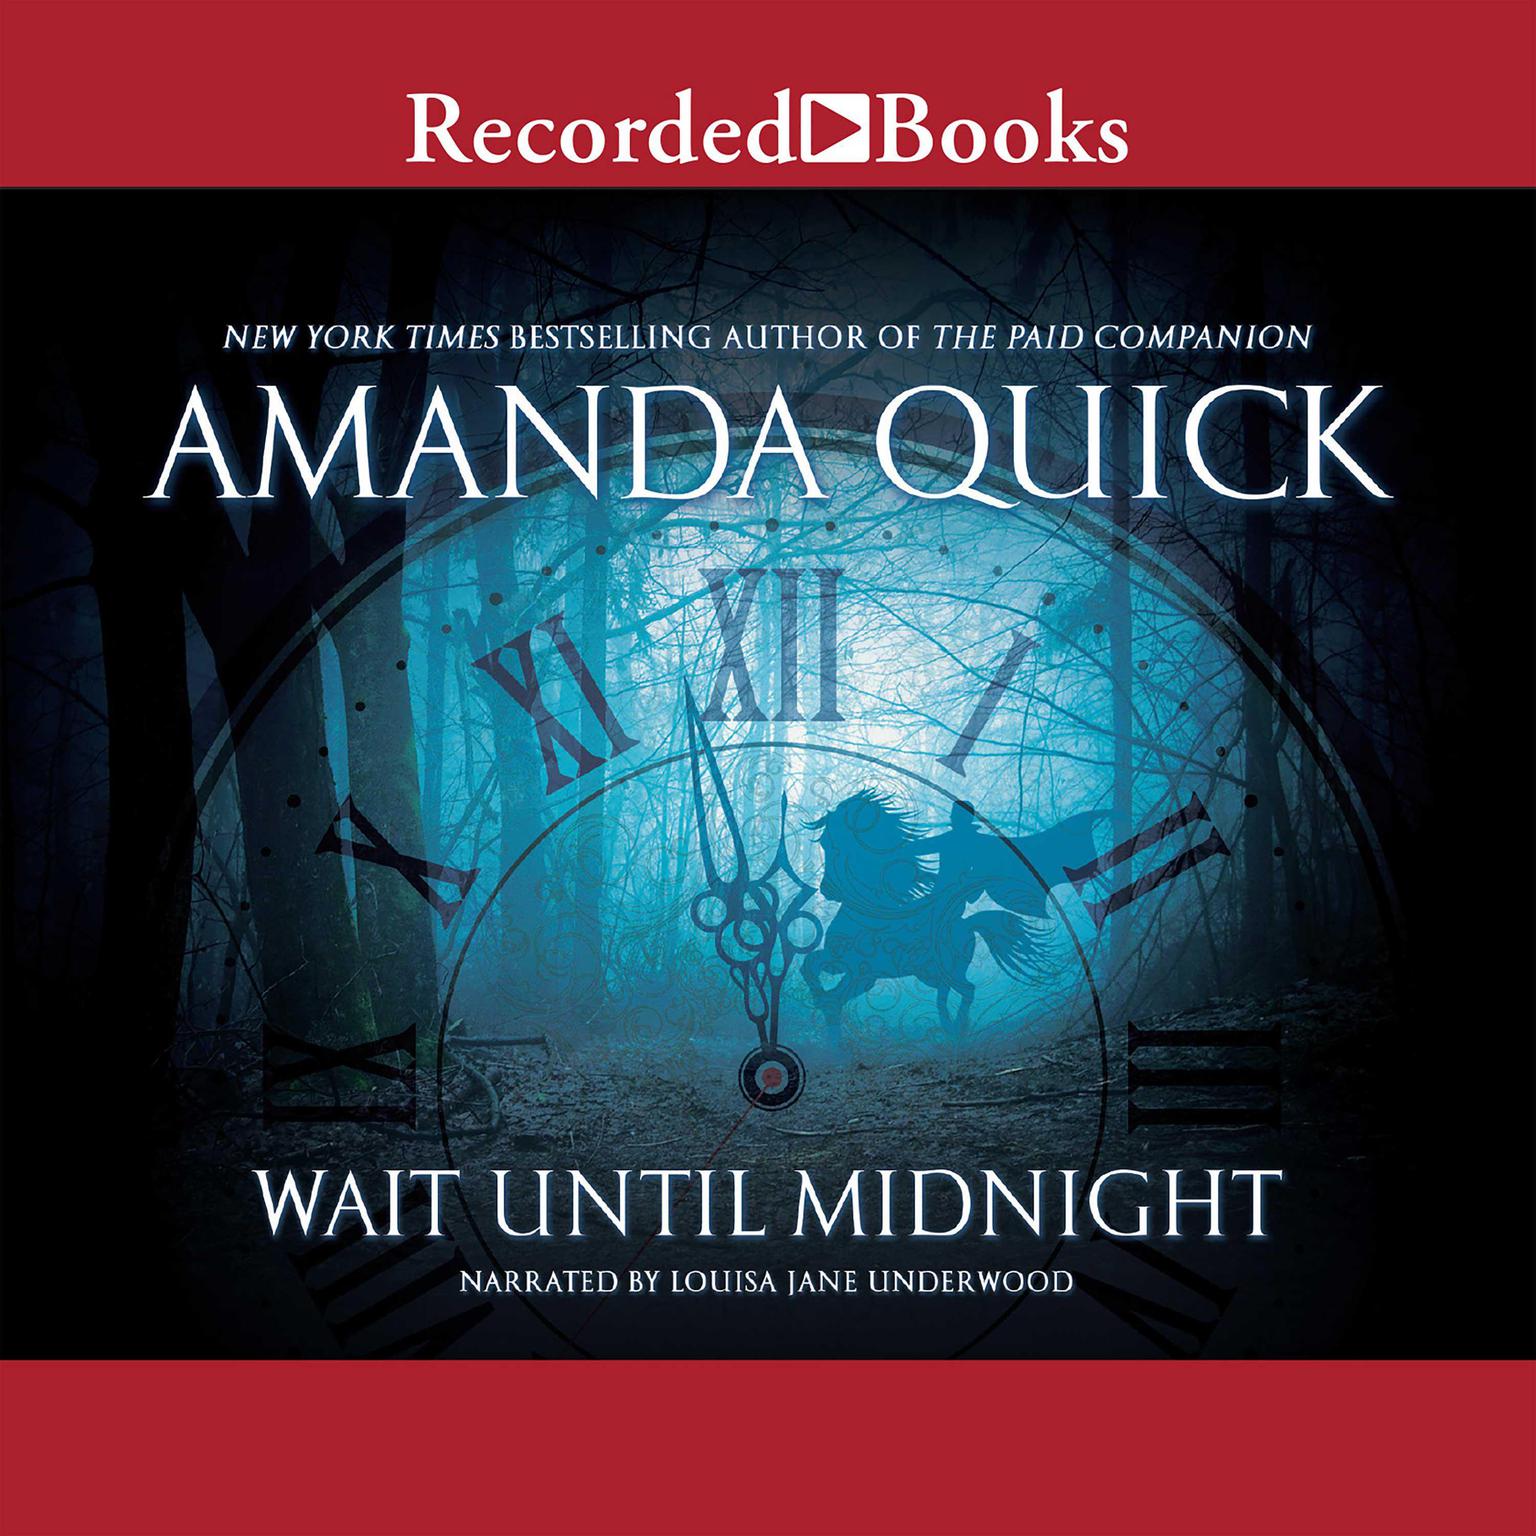 Wait Until Midnight Audiobook, by Jayne Ann Krentz